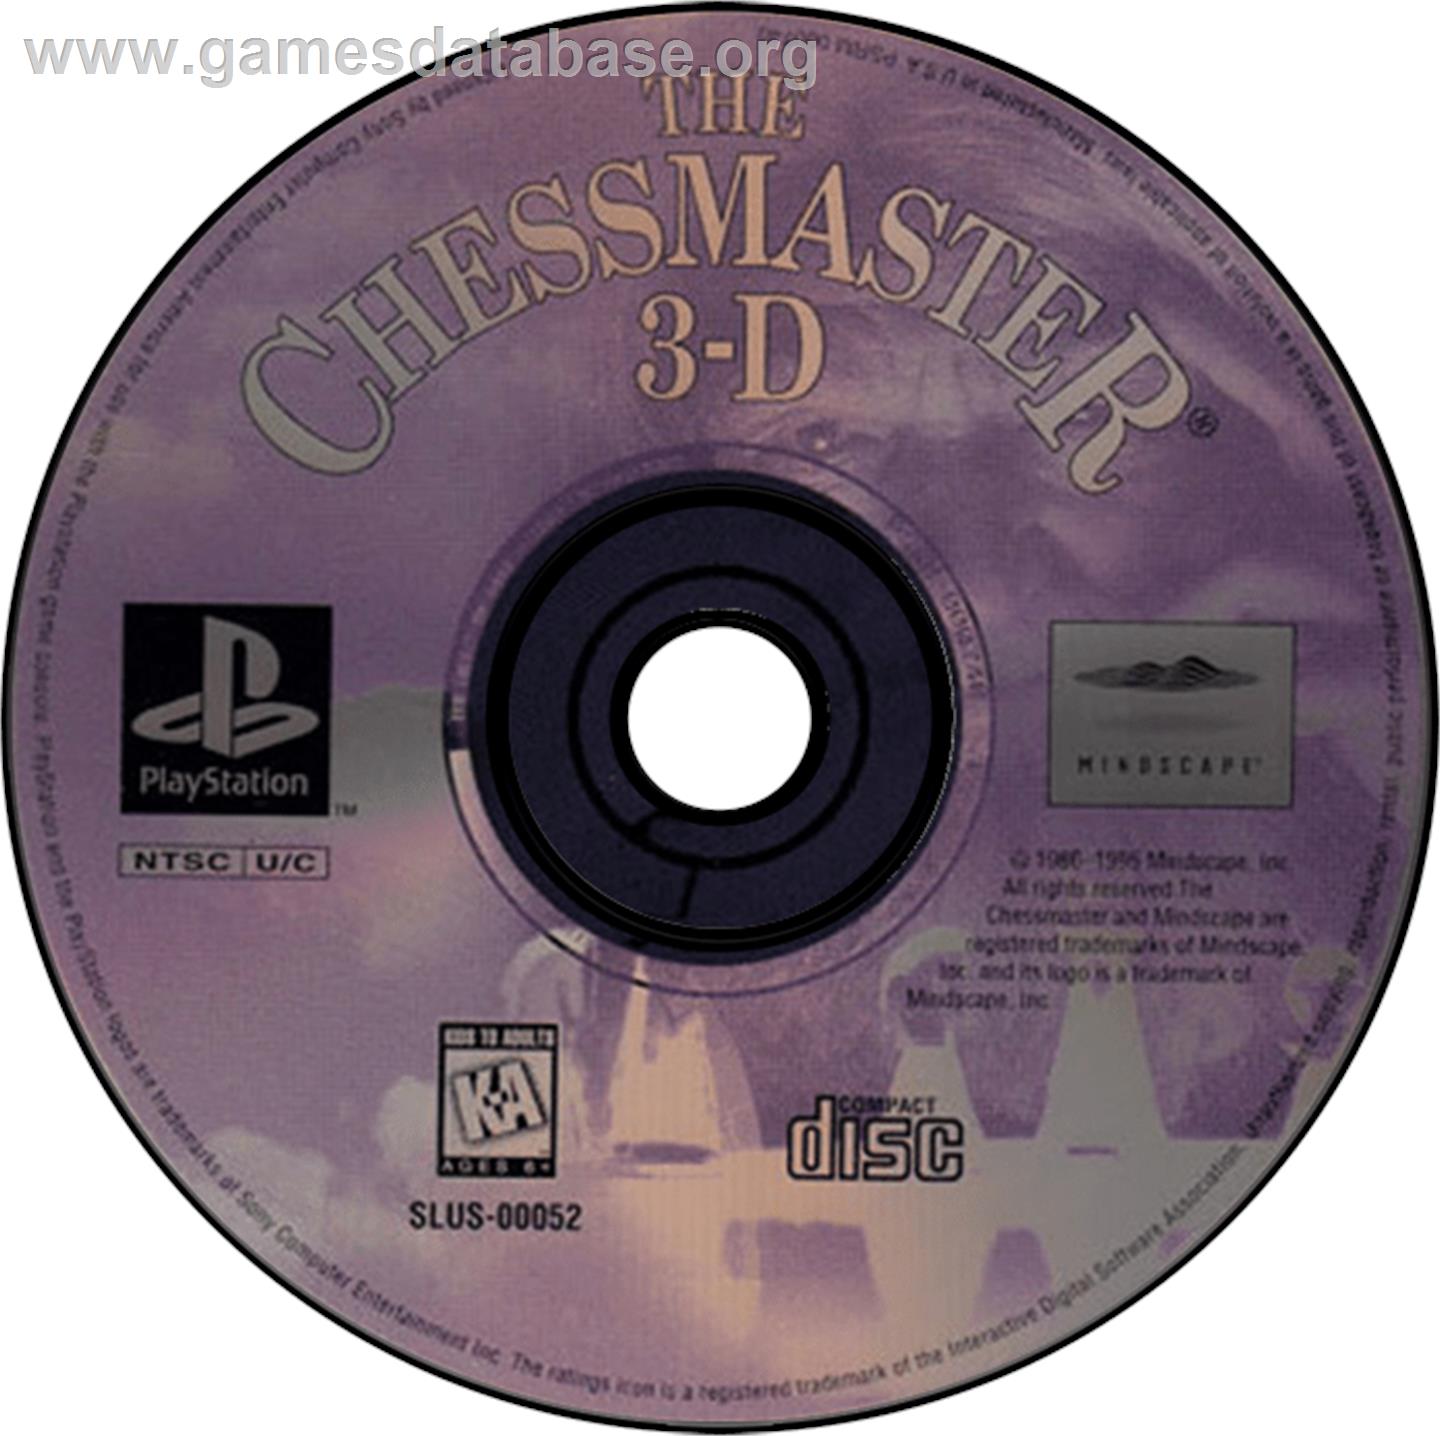 Chessmaster 3-D - Sony Playstation - Artwork - Disc